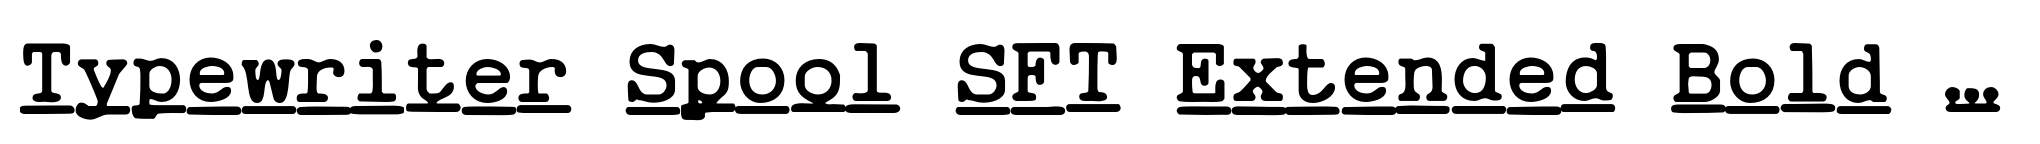 Typewriter Spool SFT Extended Bold Italic image